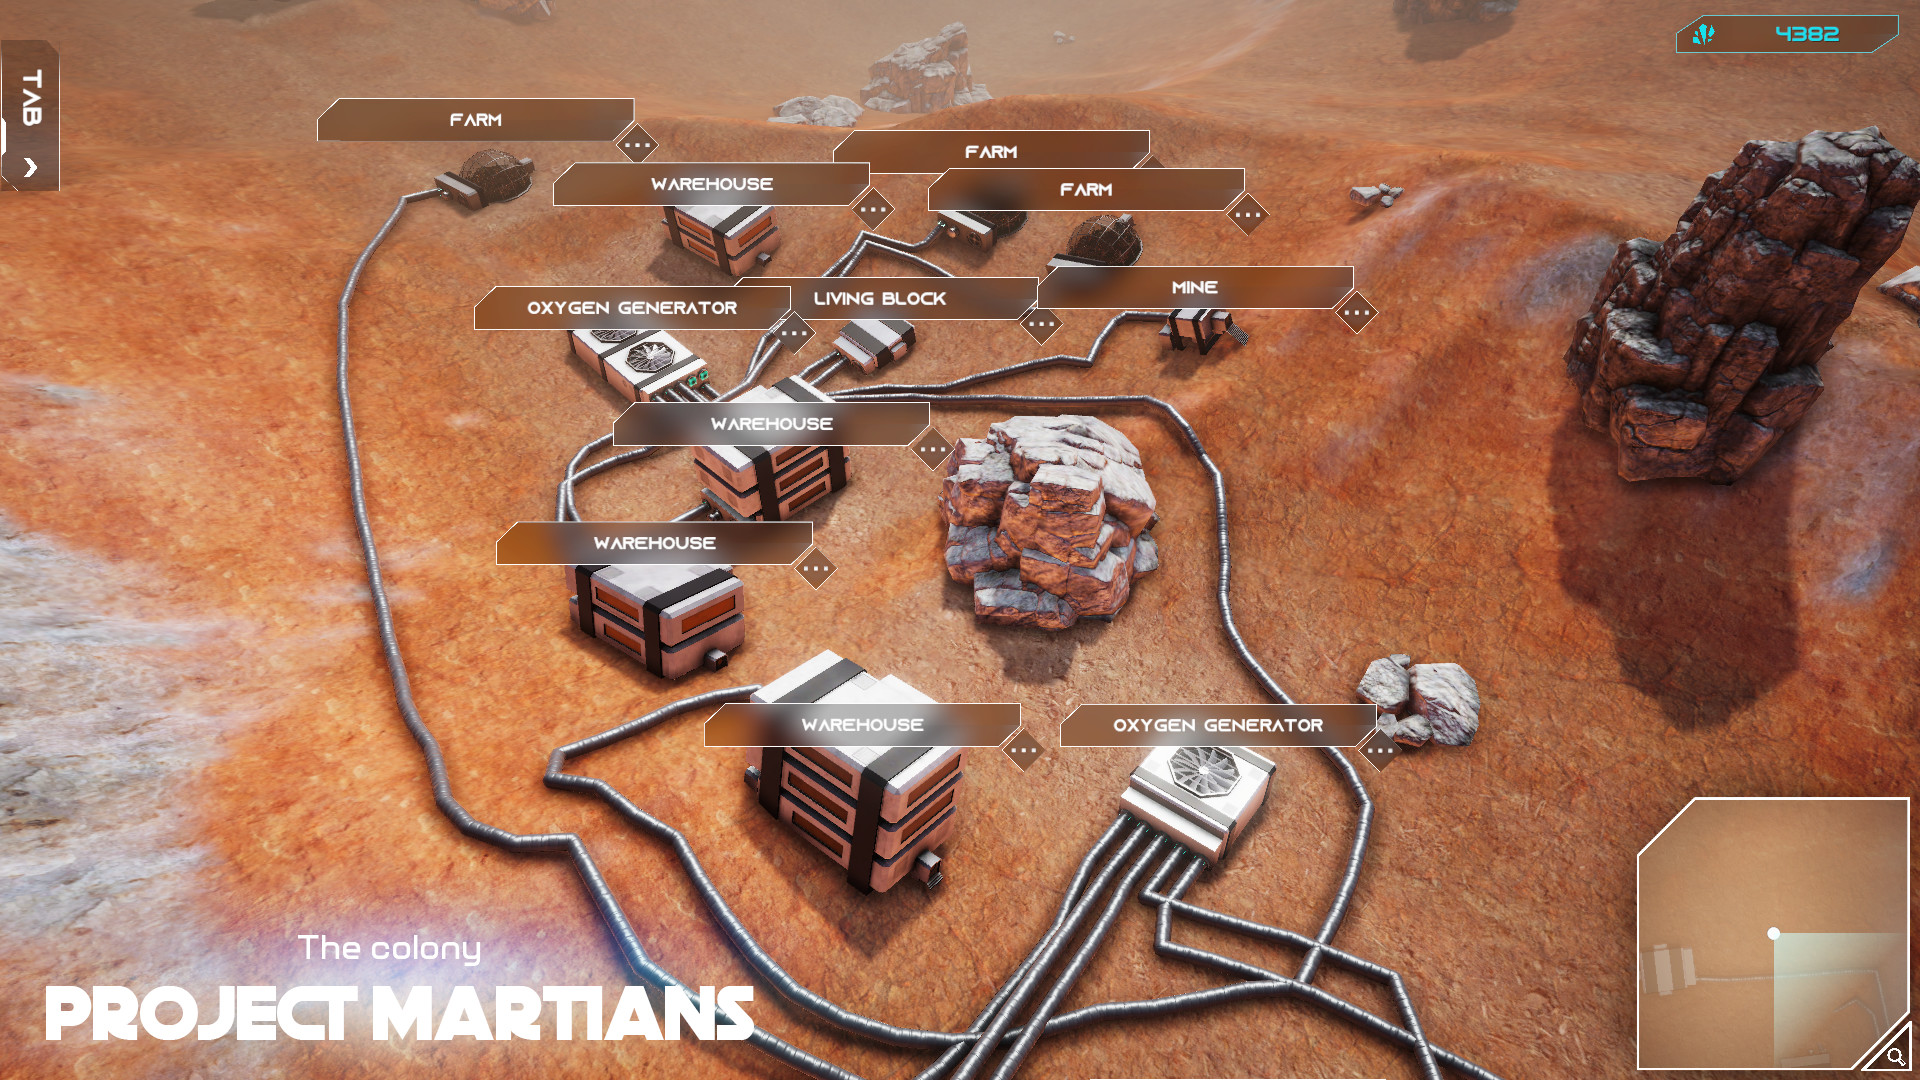 Project Martians Steam CD Key 4.42 $